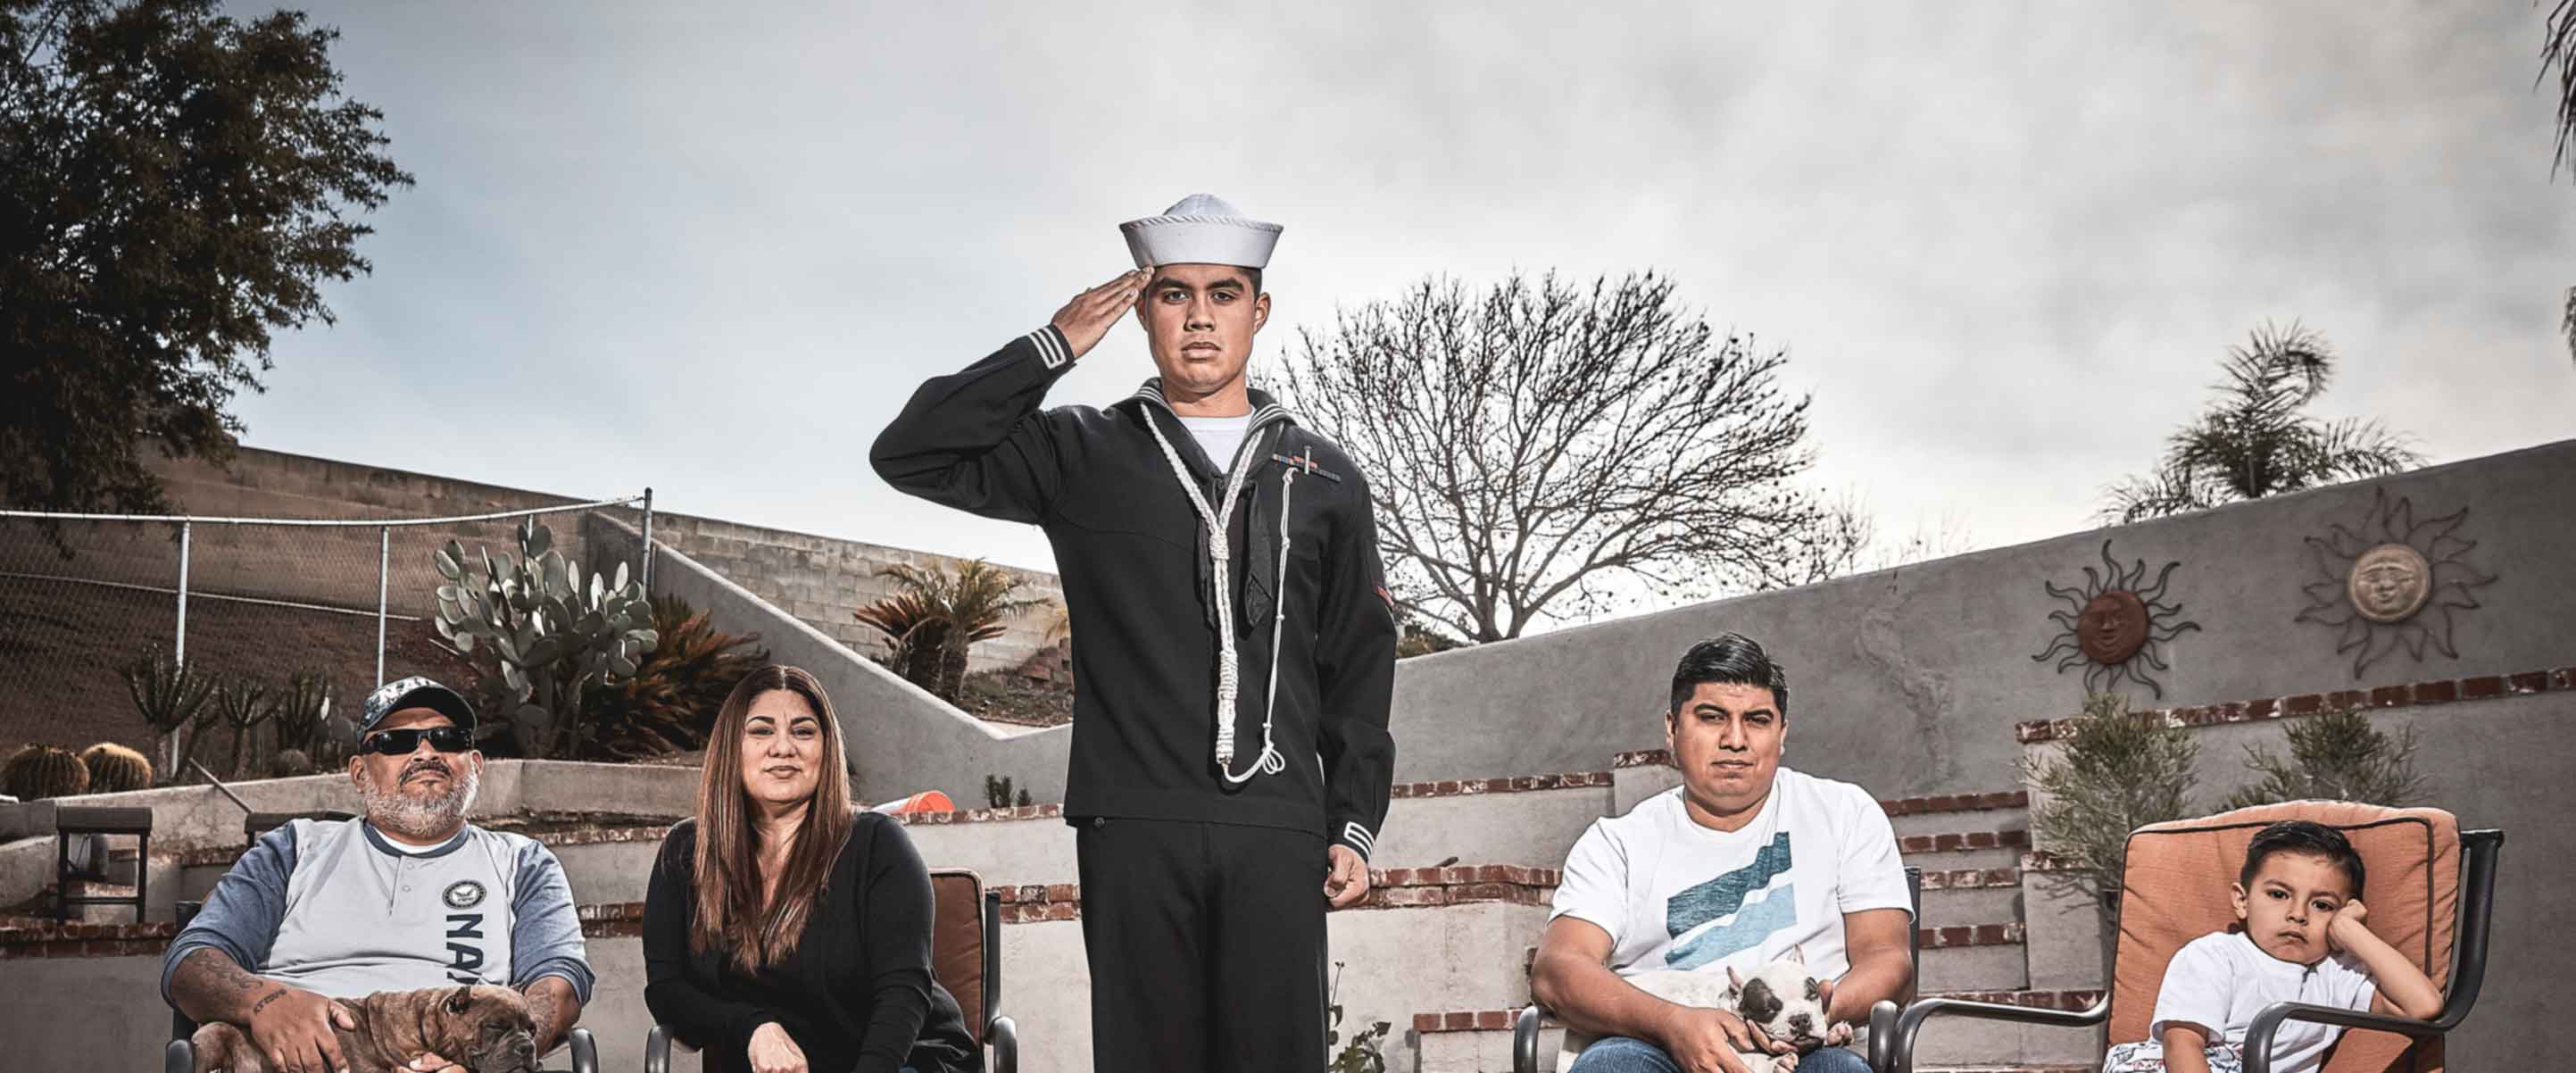 U.S. Navy Sailor Michael Benitez poses with his family in full Navy uniform